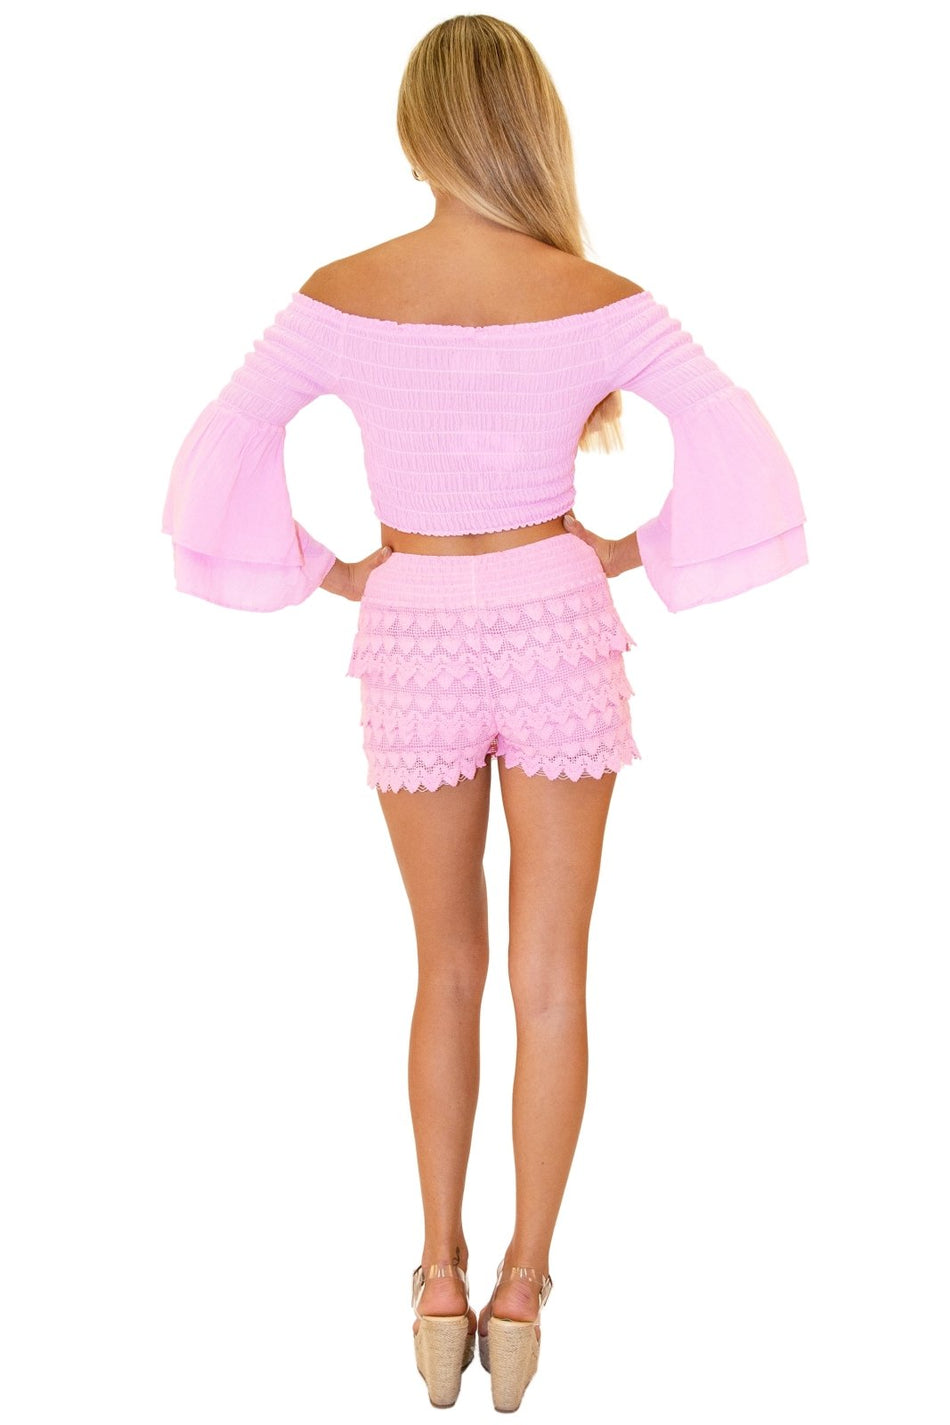 Lana' Shirred Bell Sleeve Top Pink - Seaspice Resort Wear